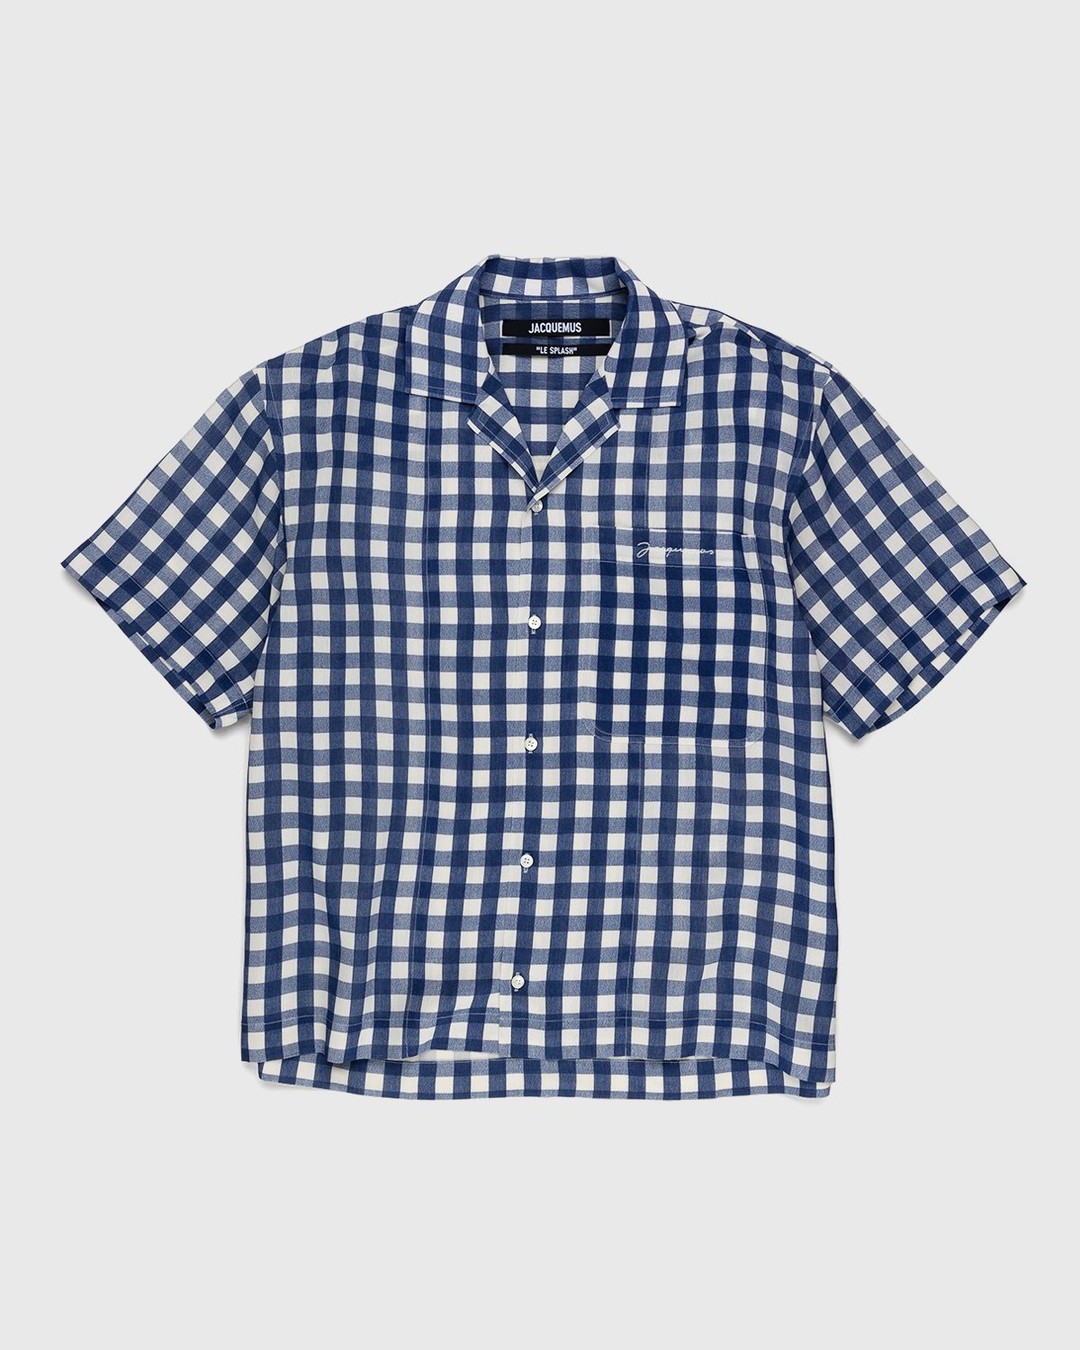 JACQUEMUS – La Chemise Jean Navy Checks - Shortsleeve Shirts - Blue - Image 1